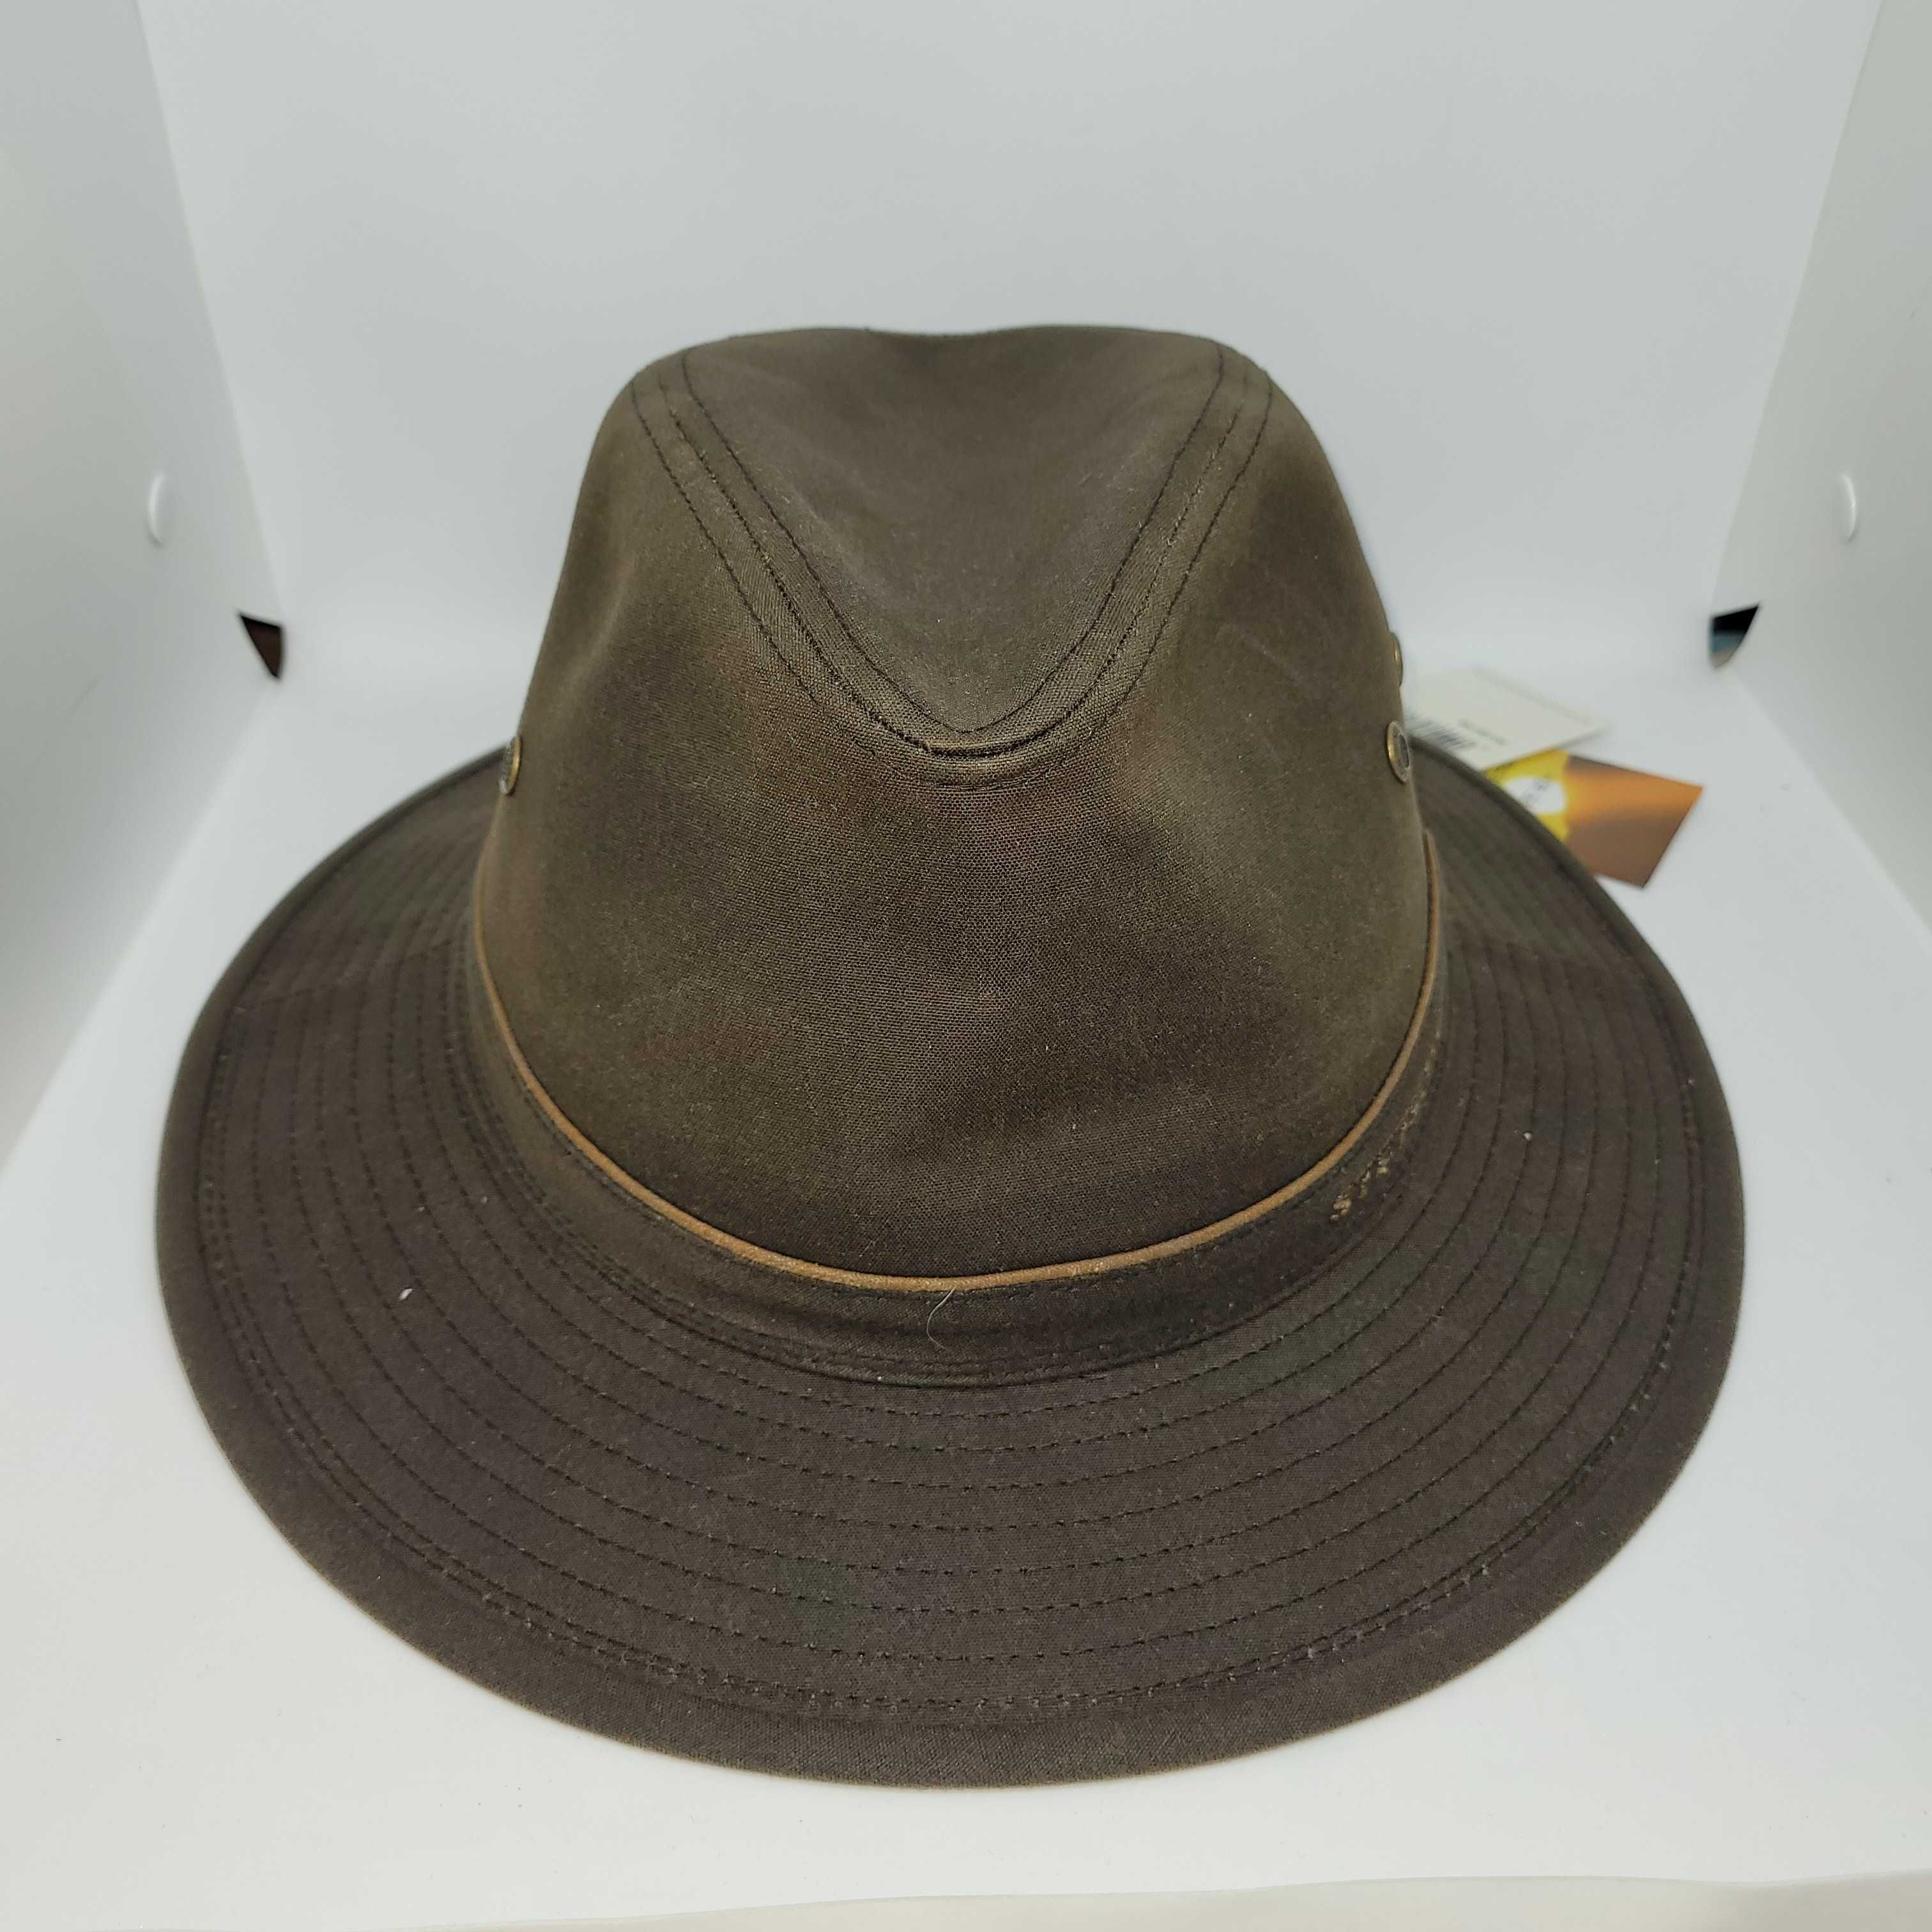 Stetson Traveller Waxed Cotton Hat, Size XXL